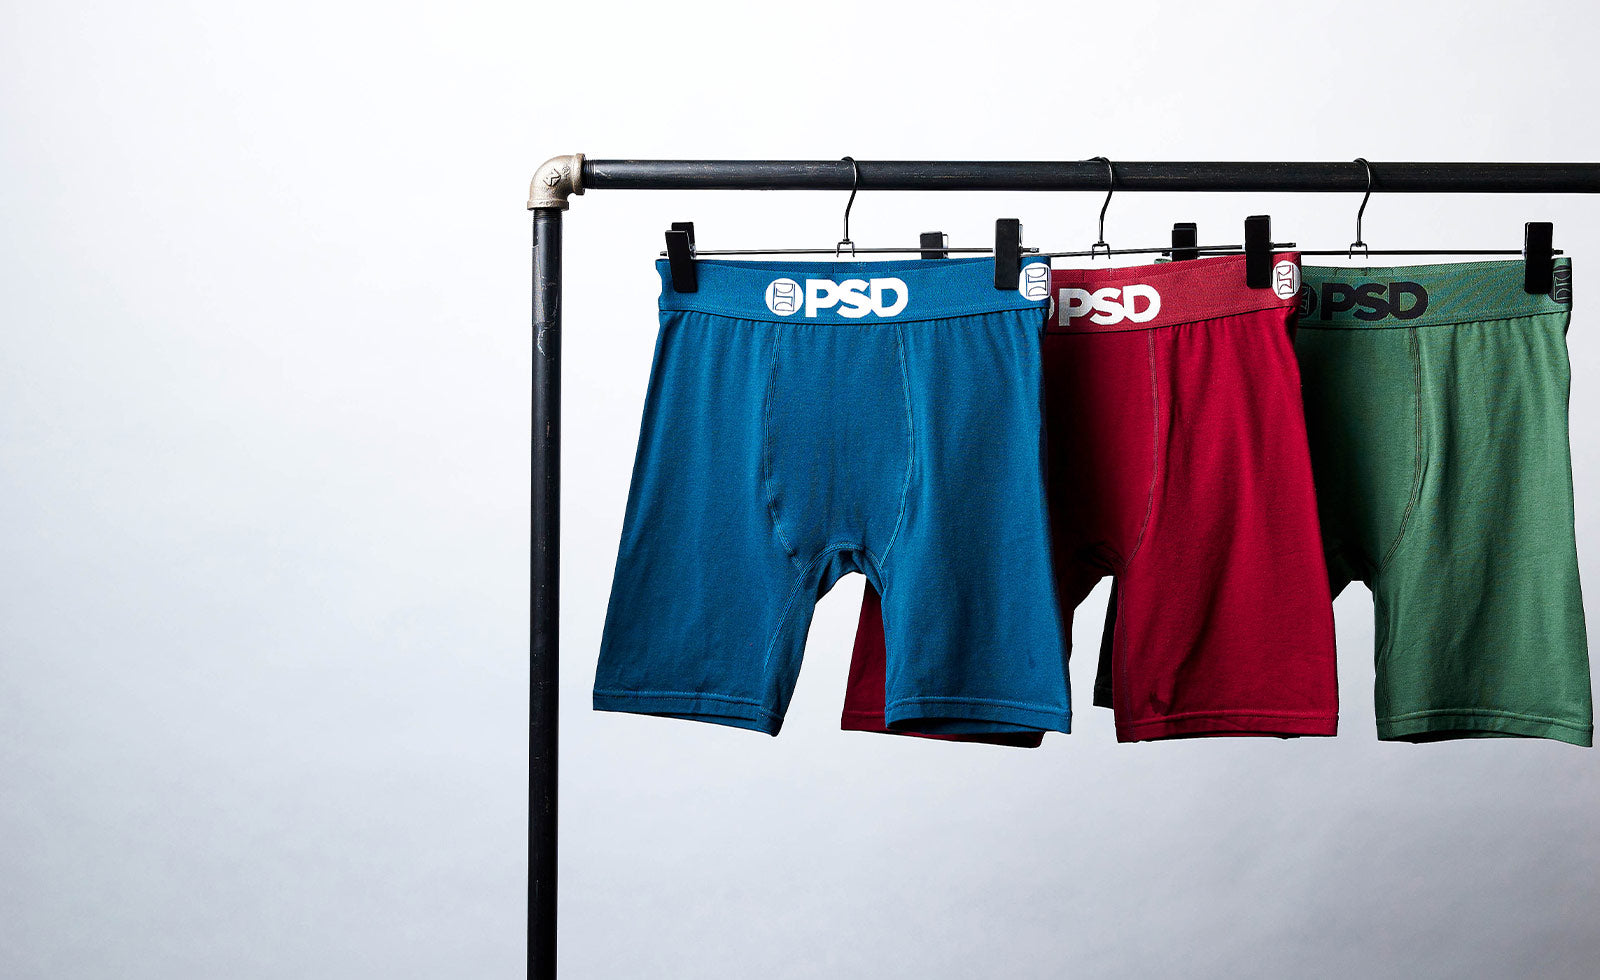 PSD Men's Sc Cheetah Pop Boxer Brief Underwear,Multi,Large